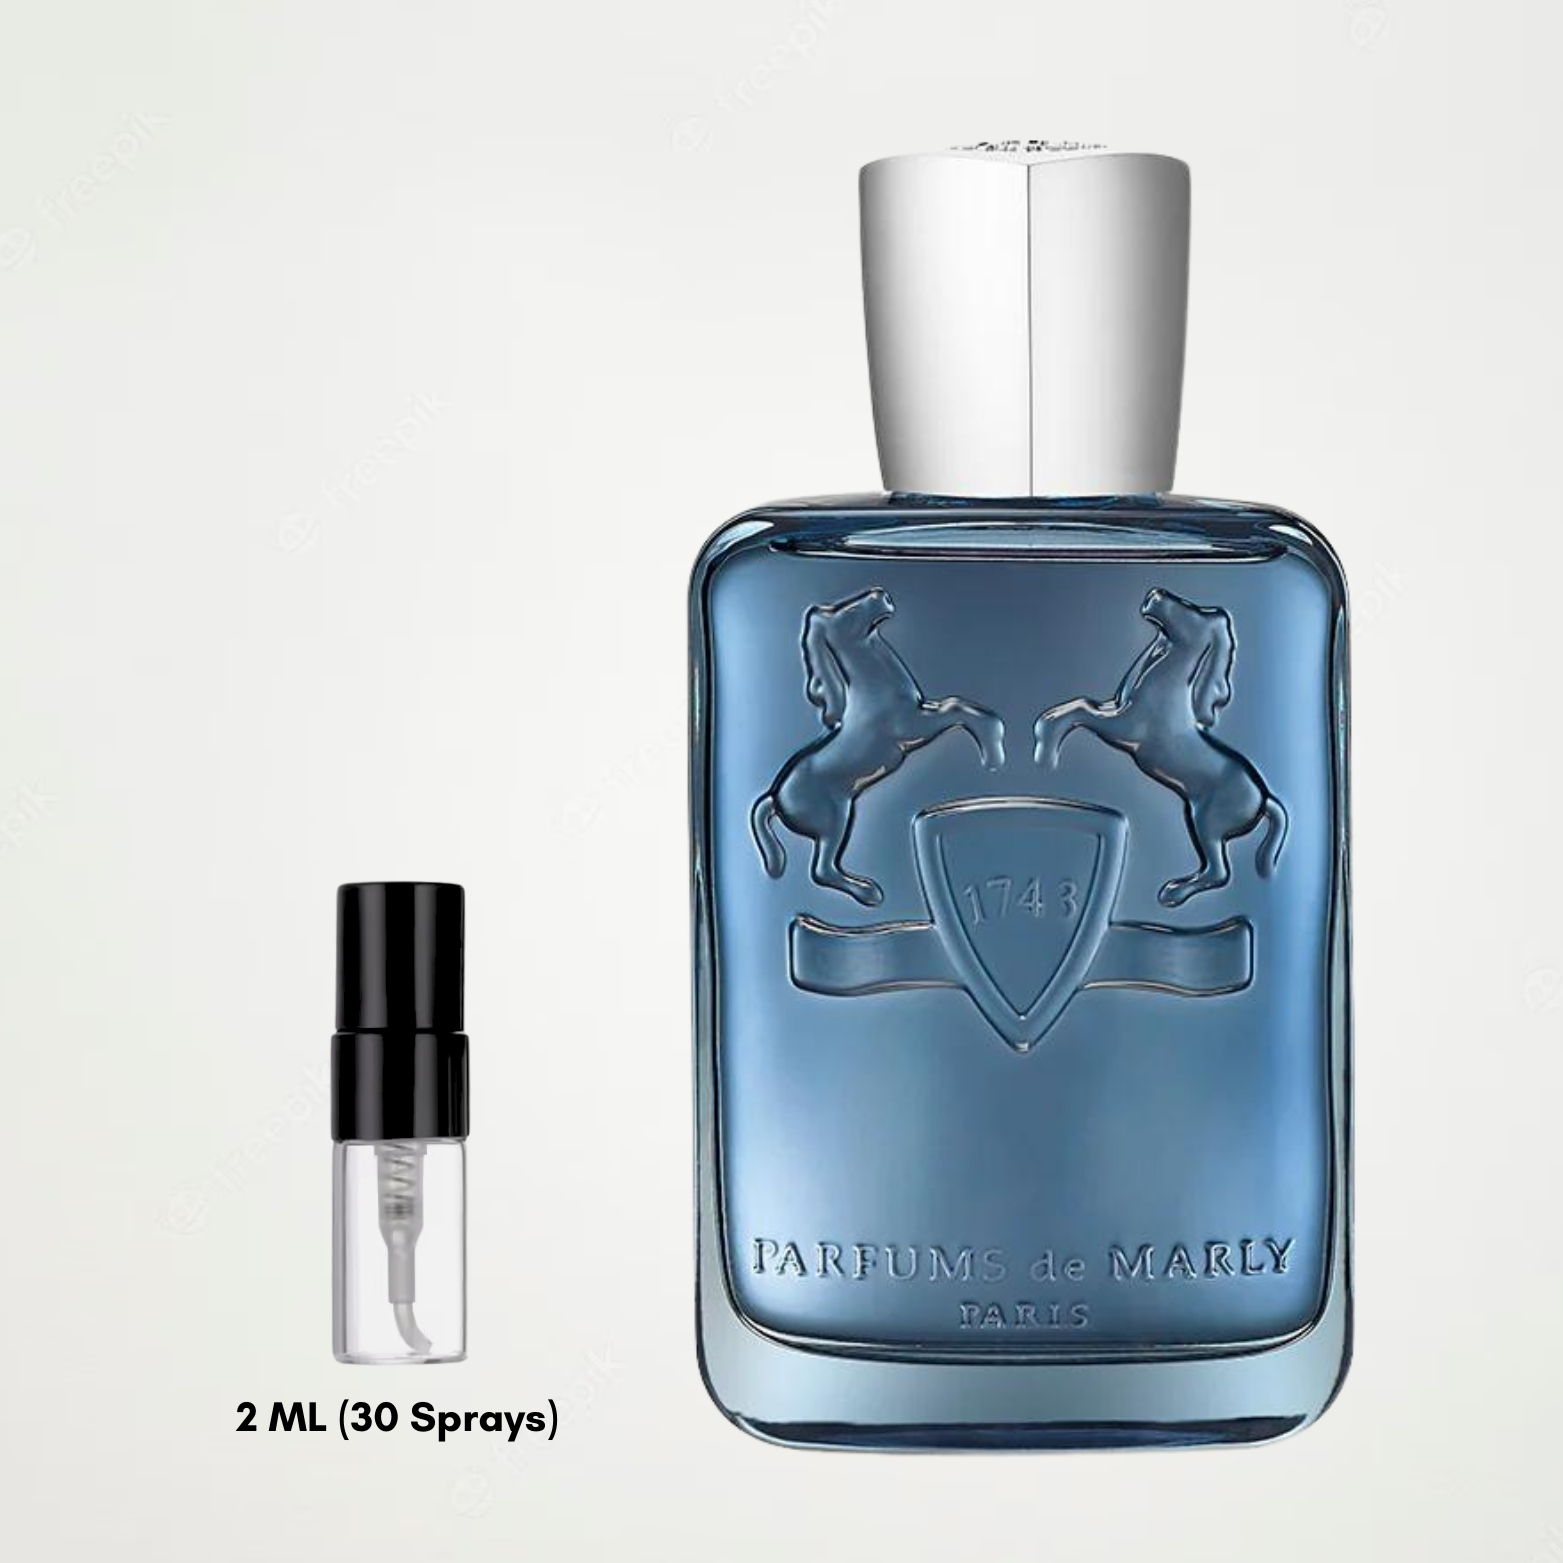 Parfums De Marly Sedley (EDP)